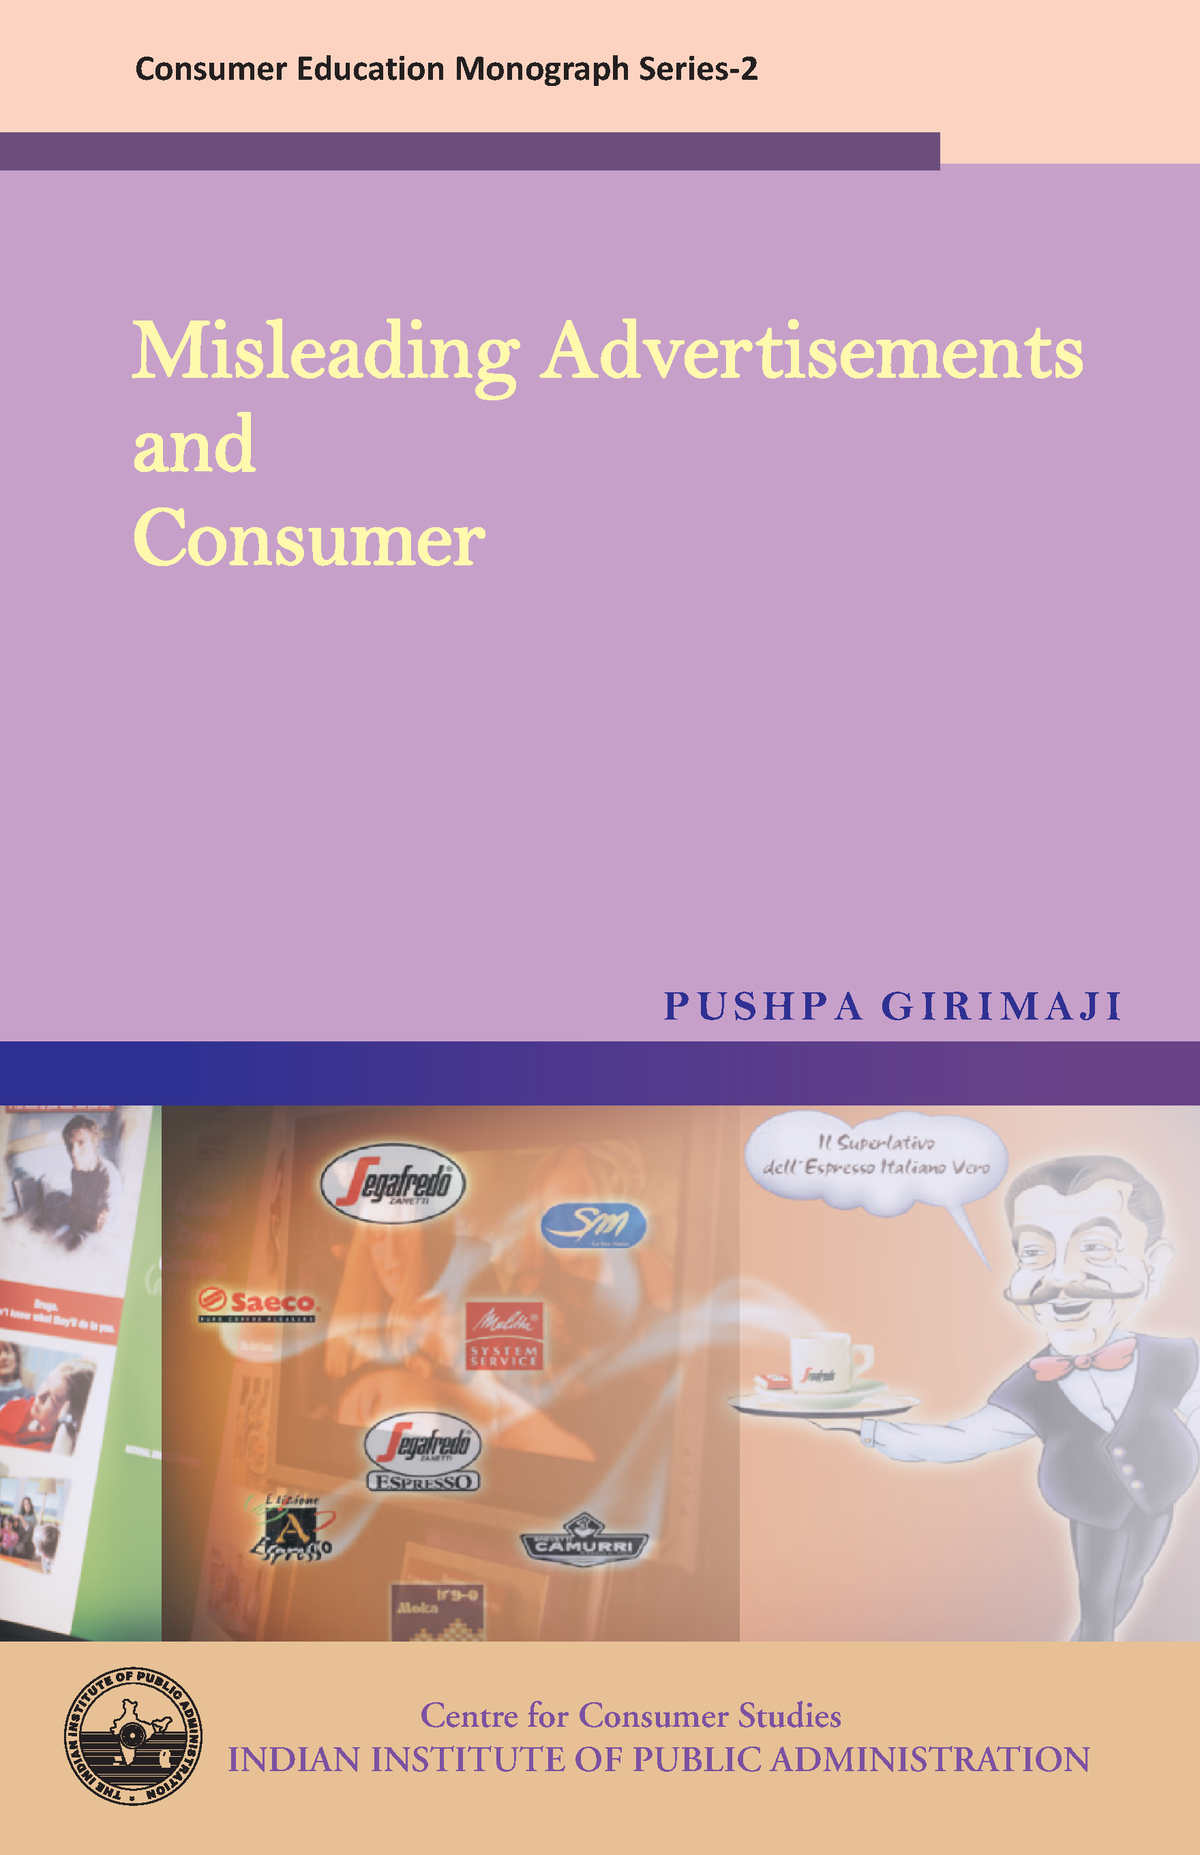 advertisements mislead consumers essay